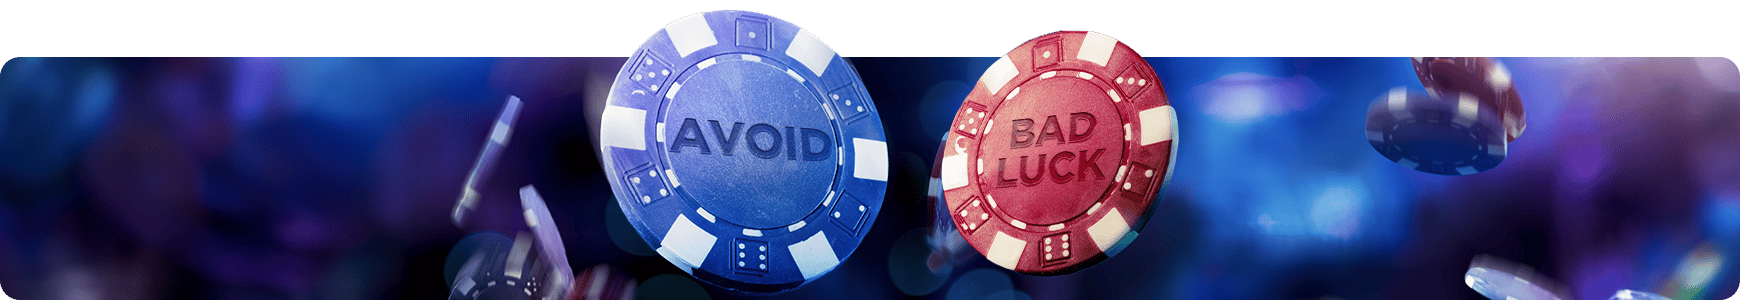 casinos-avoid